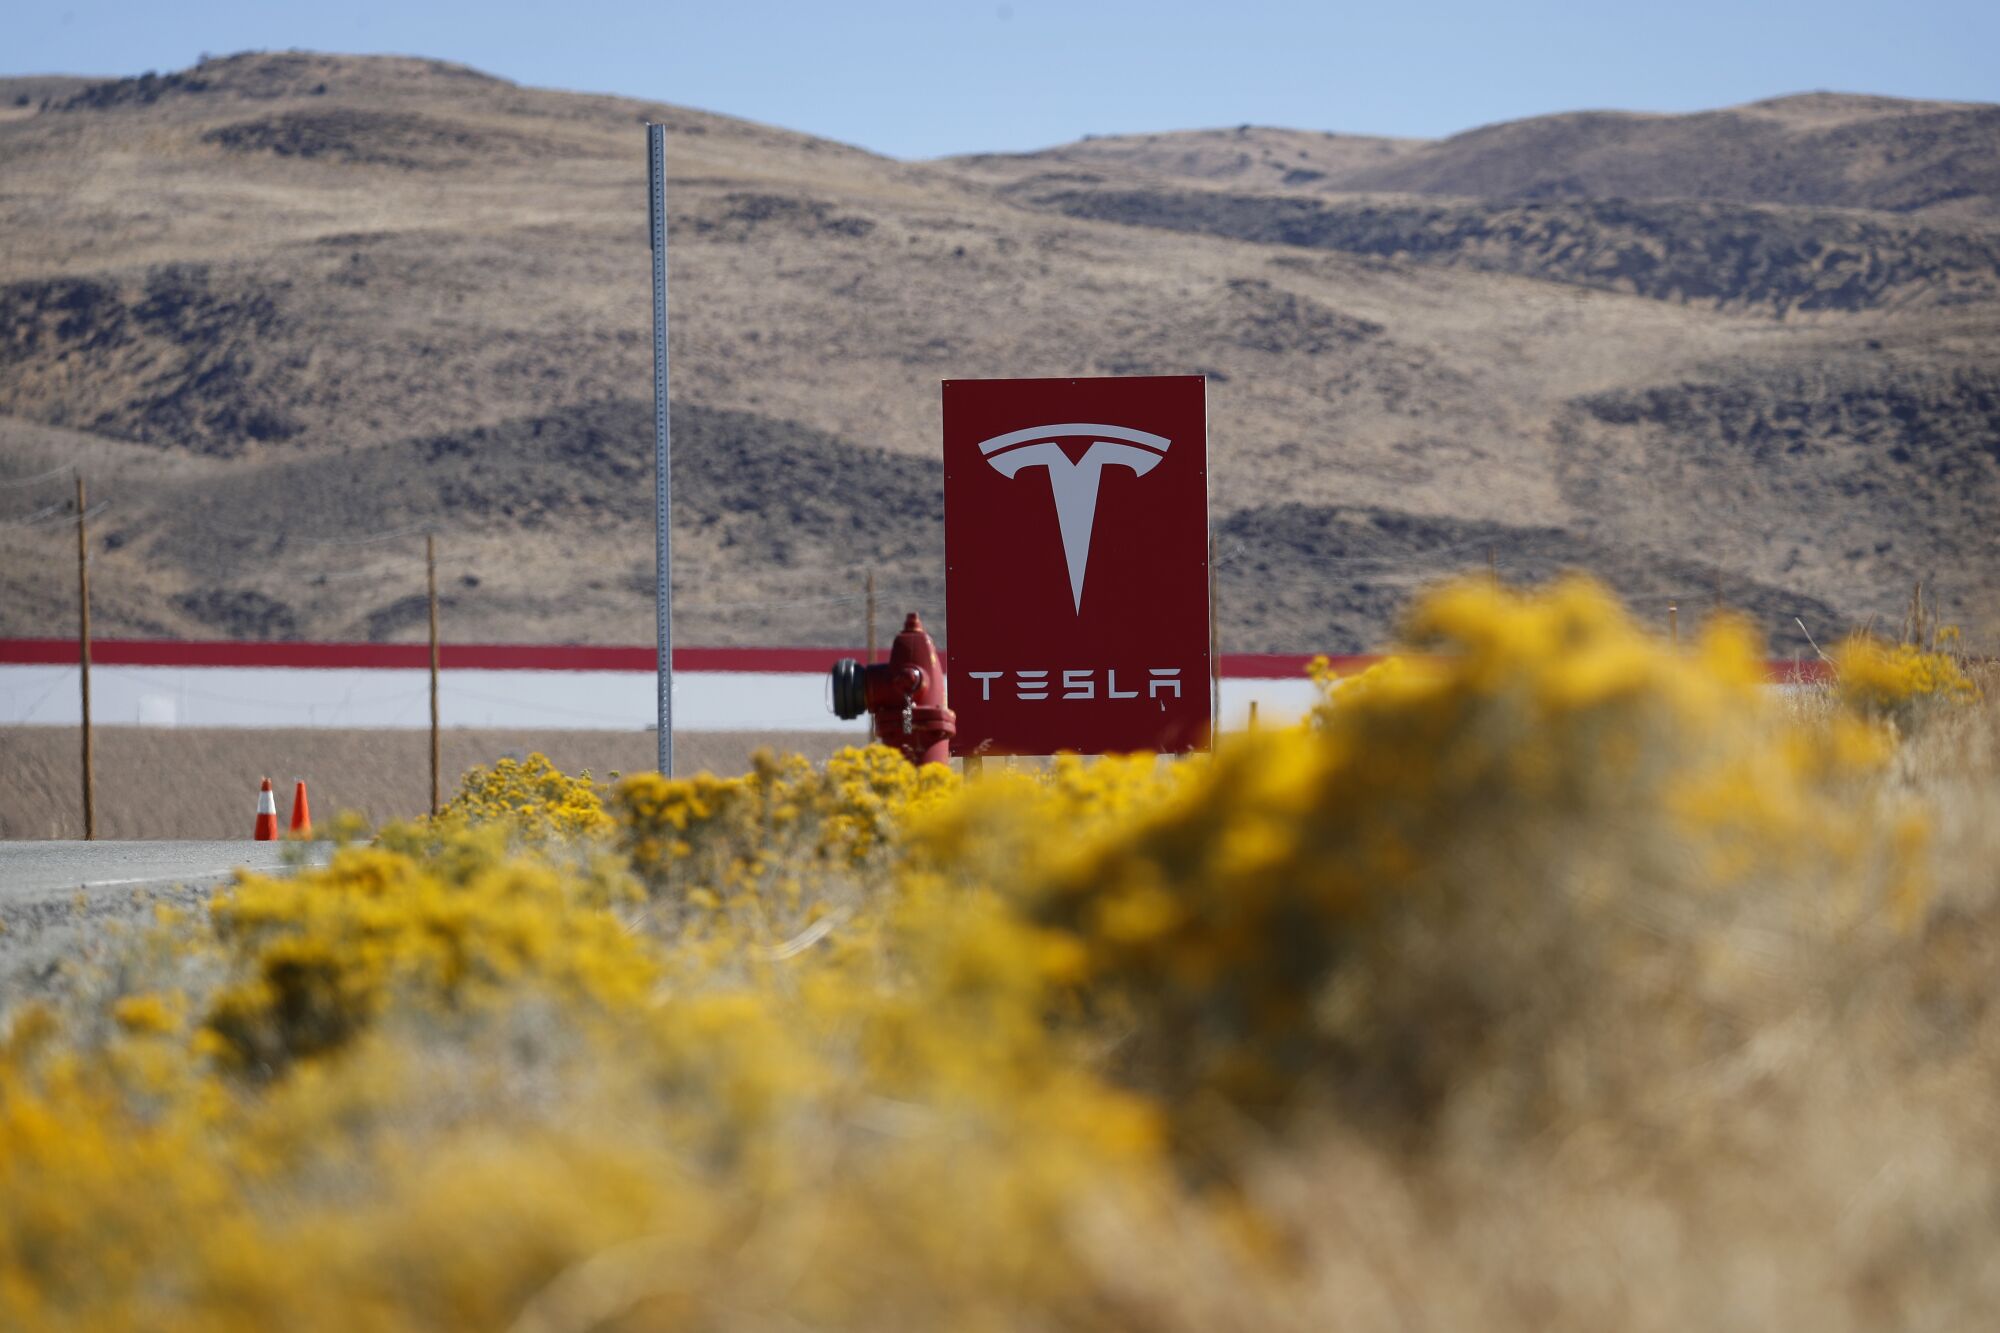 A Tesla sign amid a desert landscape